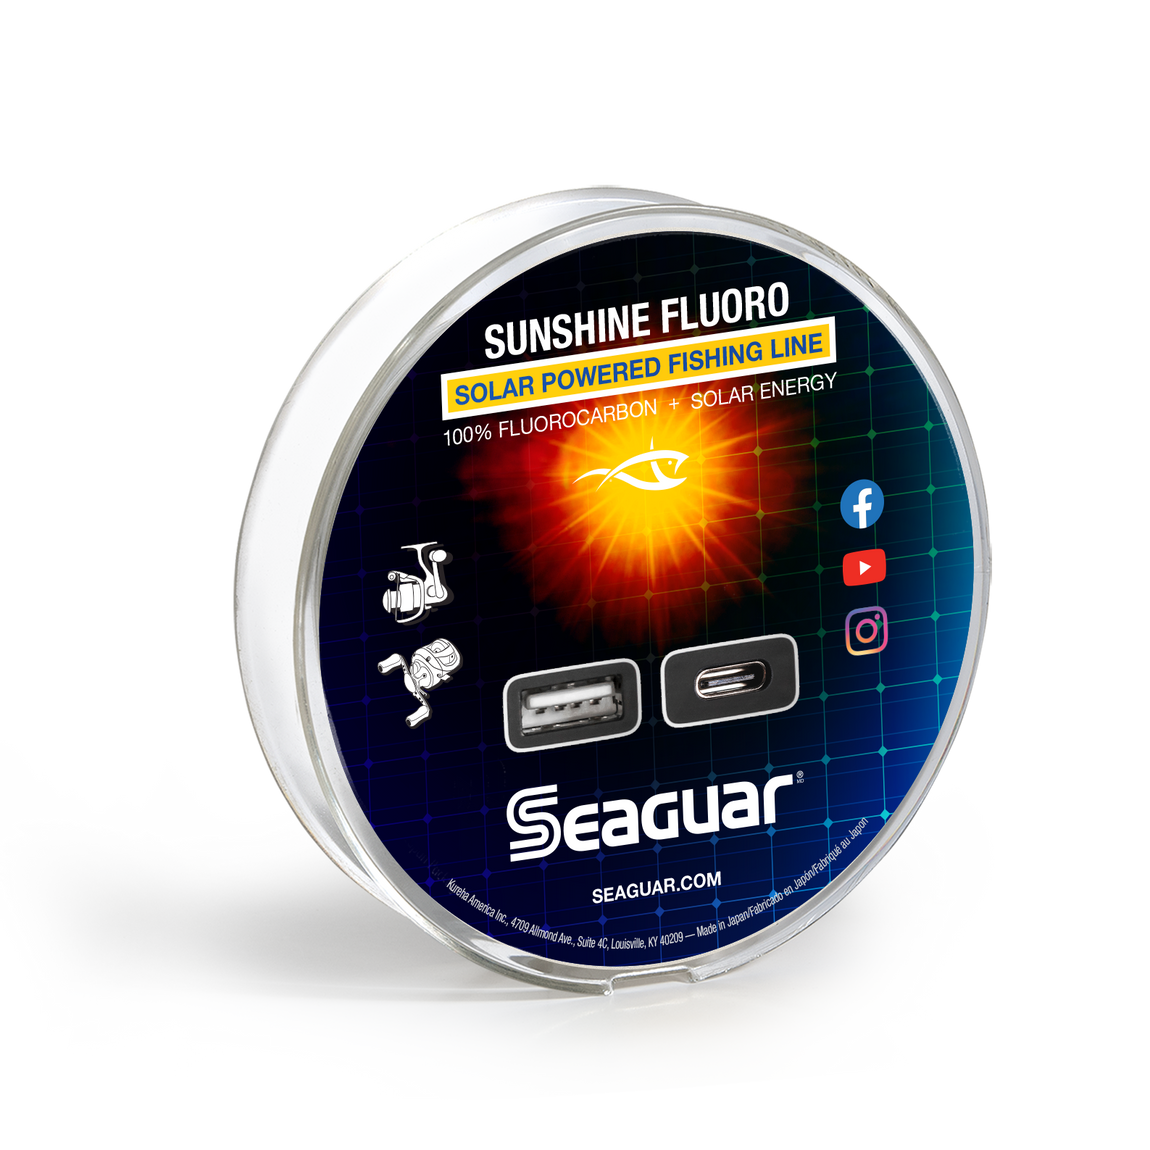 Seaguar Introduces Solar Fluoro Fishing Line